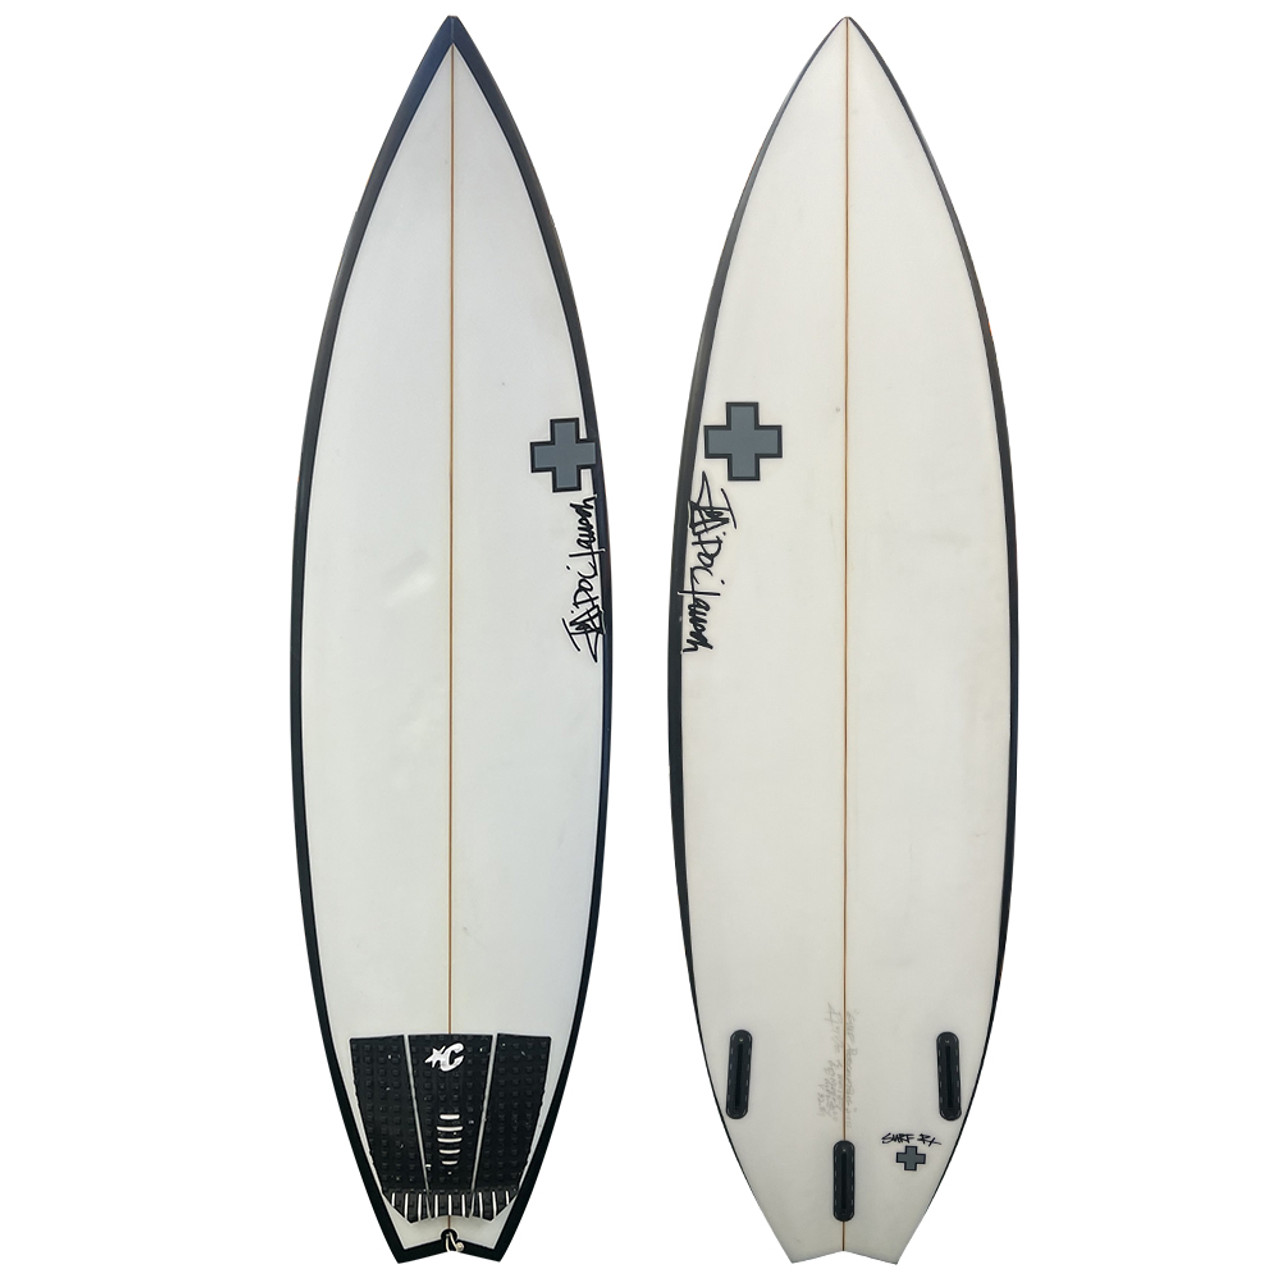 The Surfboard Studio Air Brush TG-470 Silver